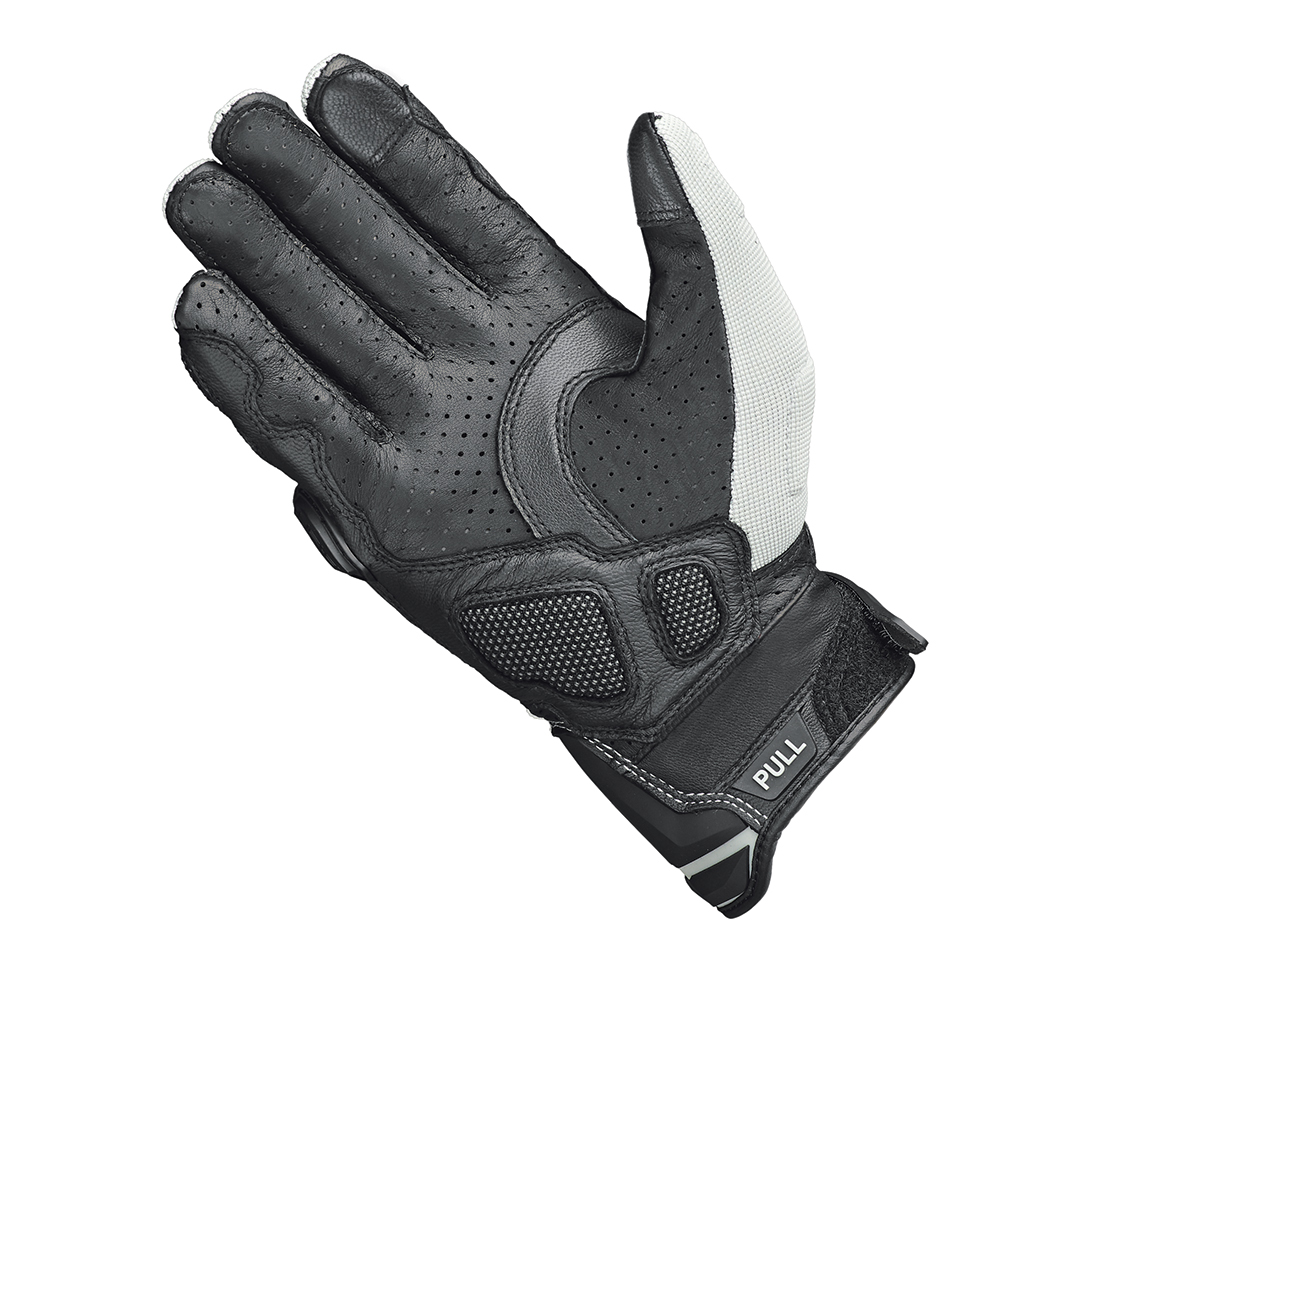 Sambia Pro Summer glove